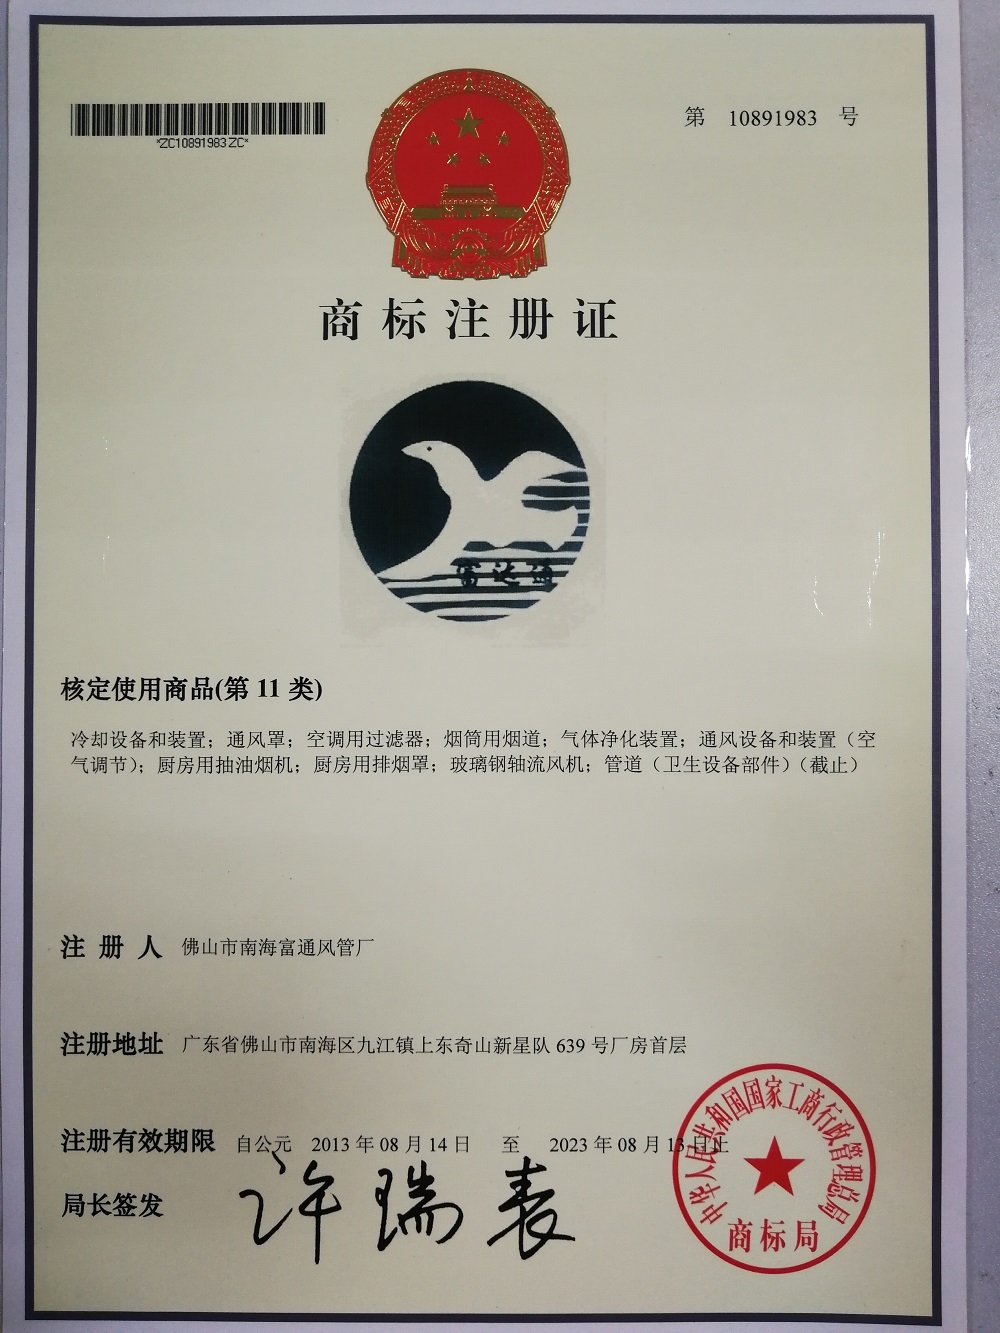 A trademark registration certificate